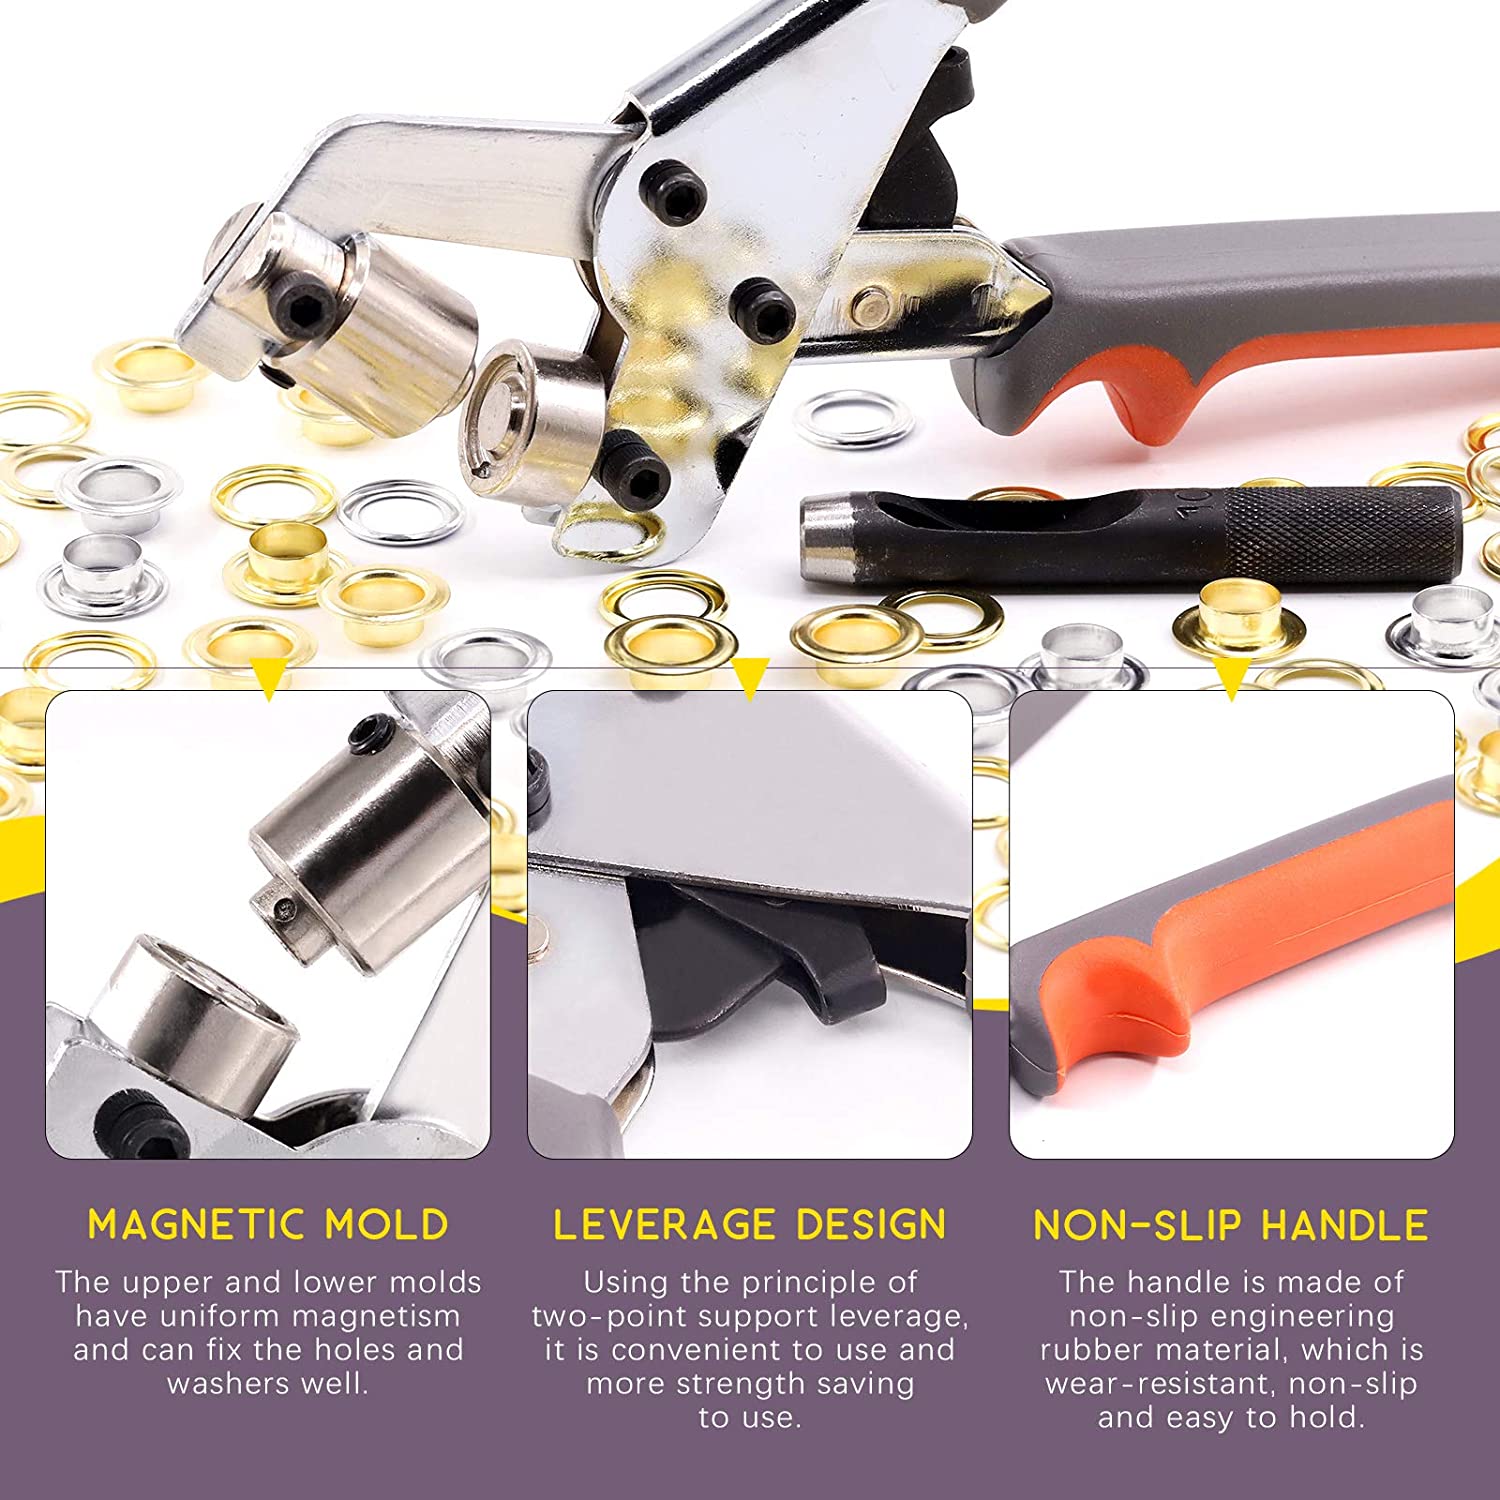 (10.5mm) 90set Grommet Pliers Metal Grommets Kit,Handheld Hole Punch Pliers  for Grommet Machine Hand Press Grommet Tool Leather